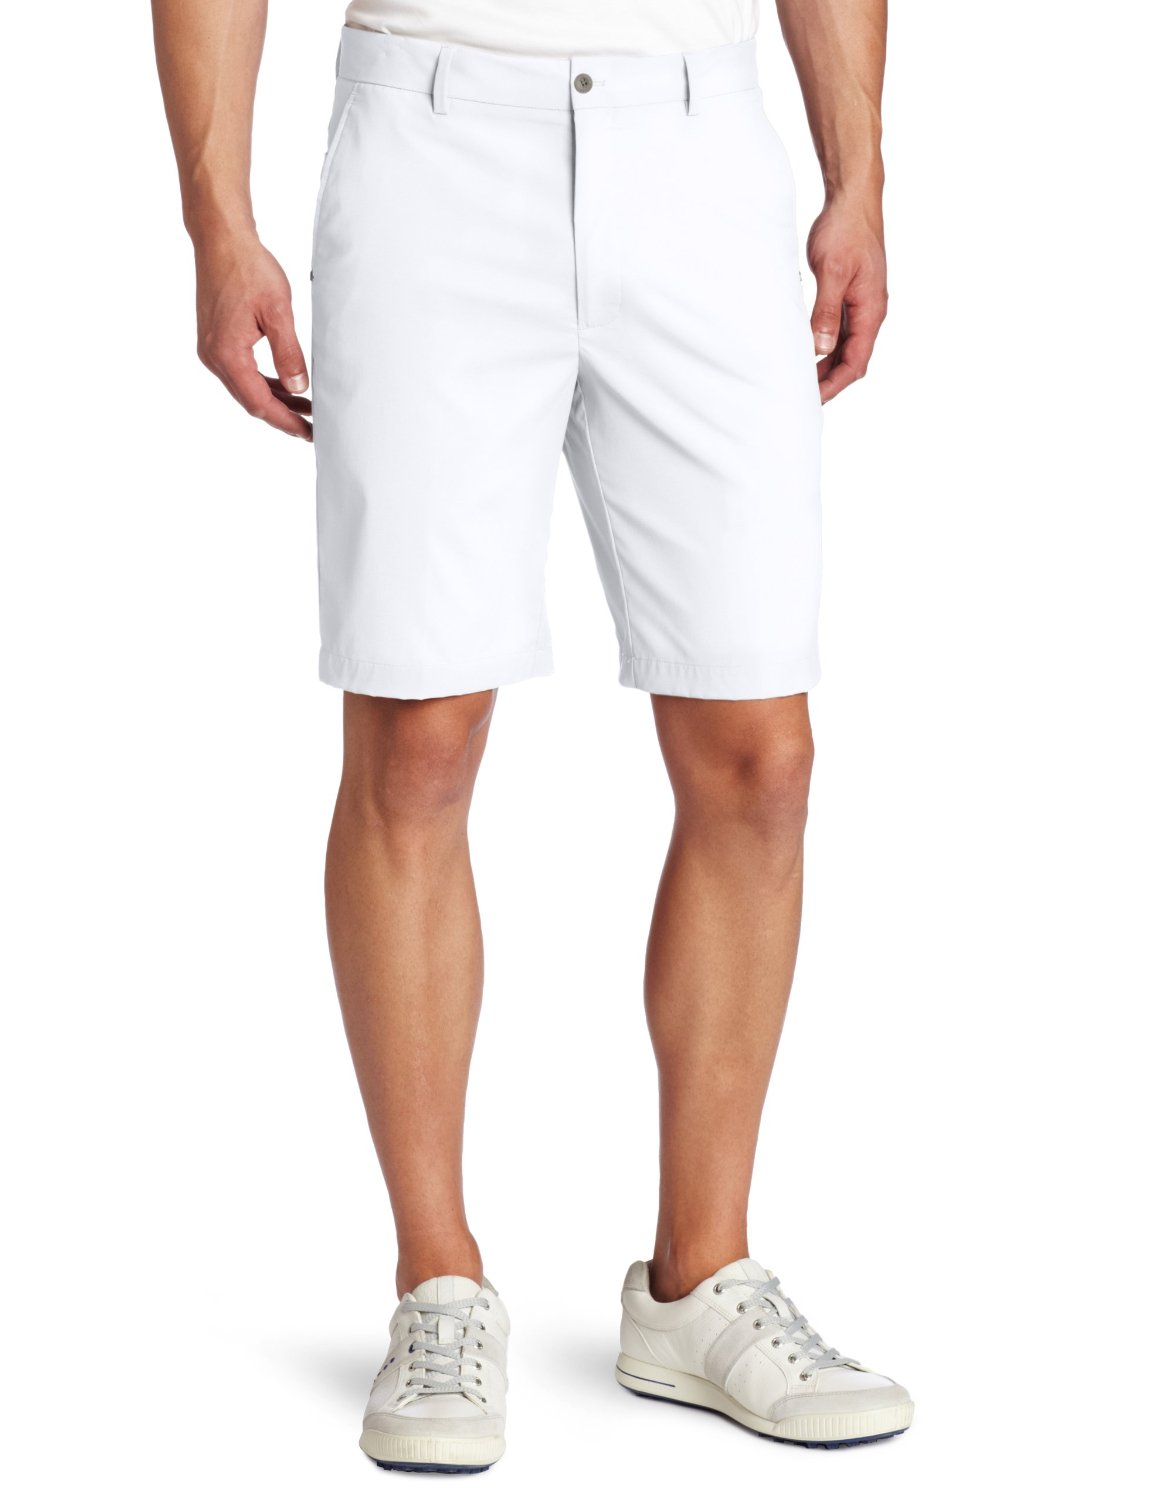 Greg Norman Mens Collection 5 Pocket Tech Golf Shorts